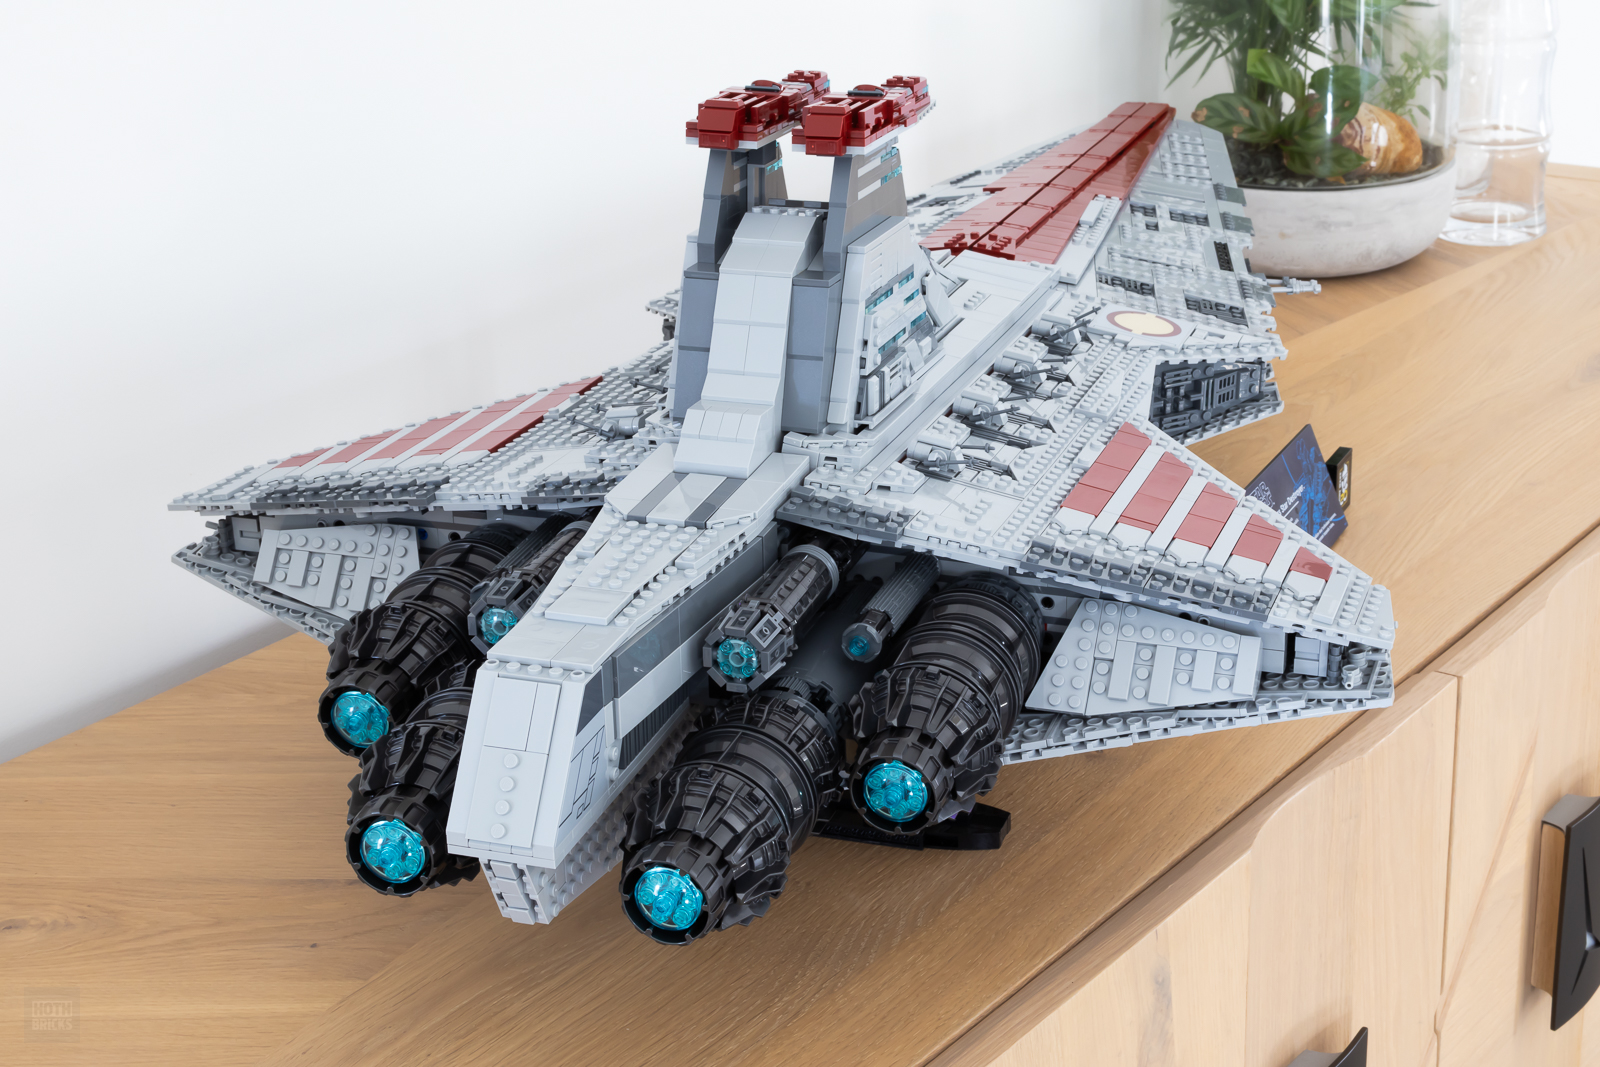 Lego Star Wars Venator-Class Republic Attack Cruiser review